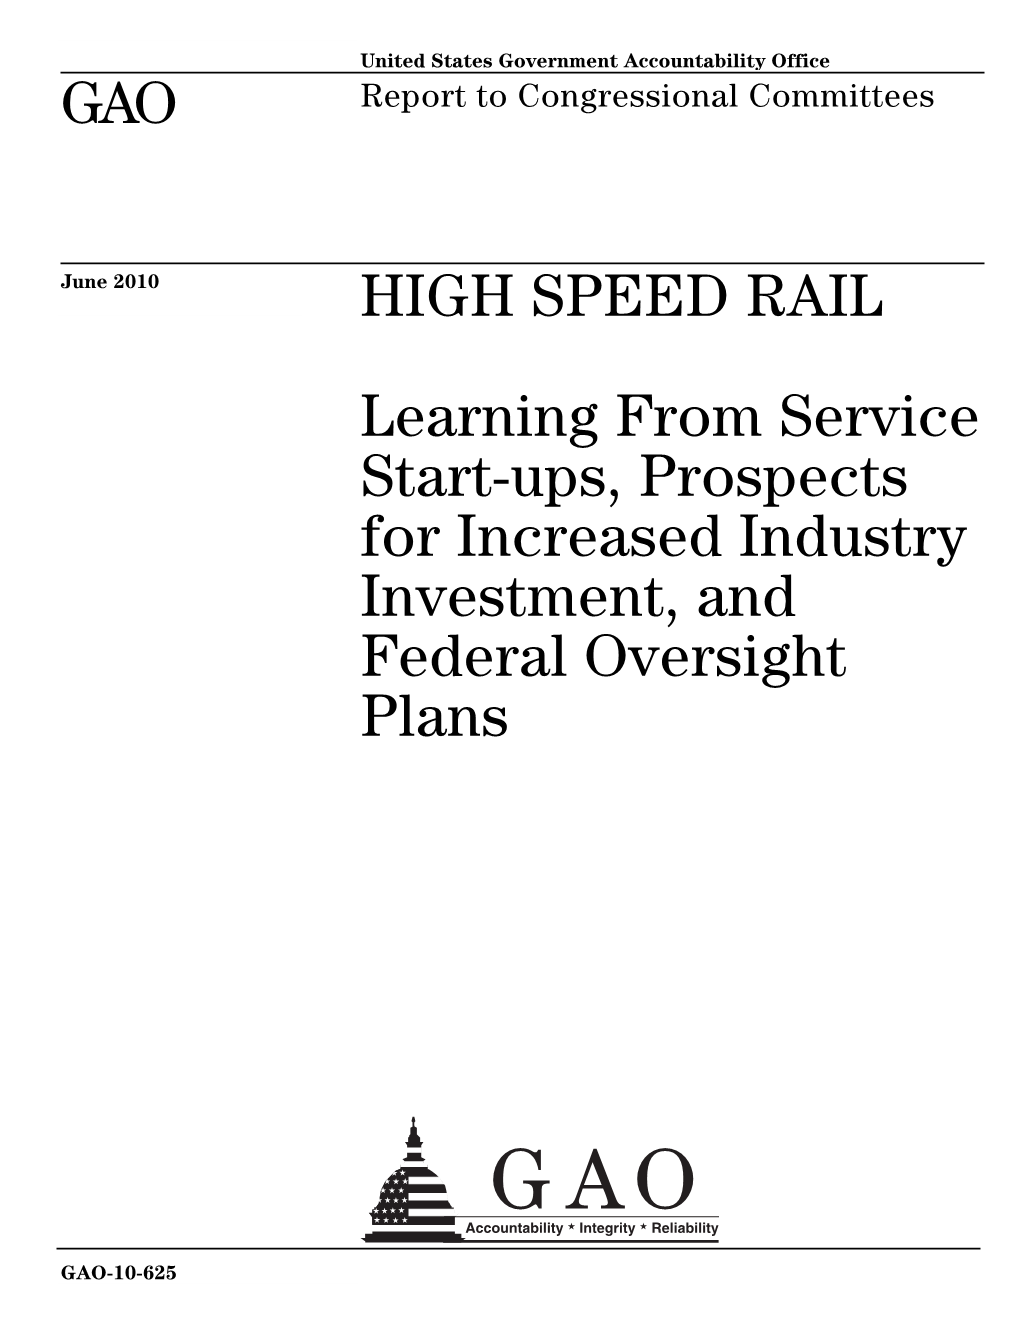 GAO-10-625 High Speed Rail